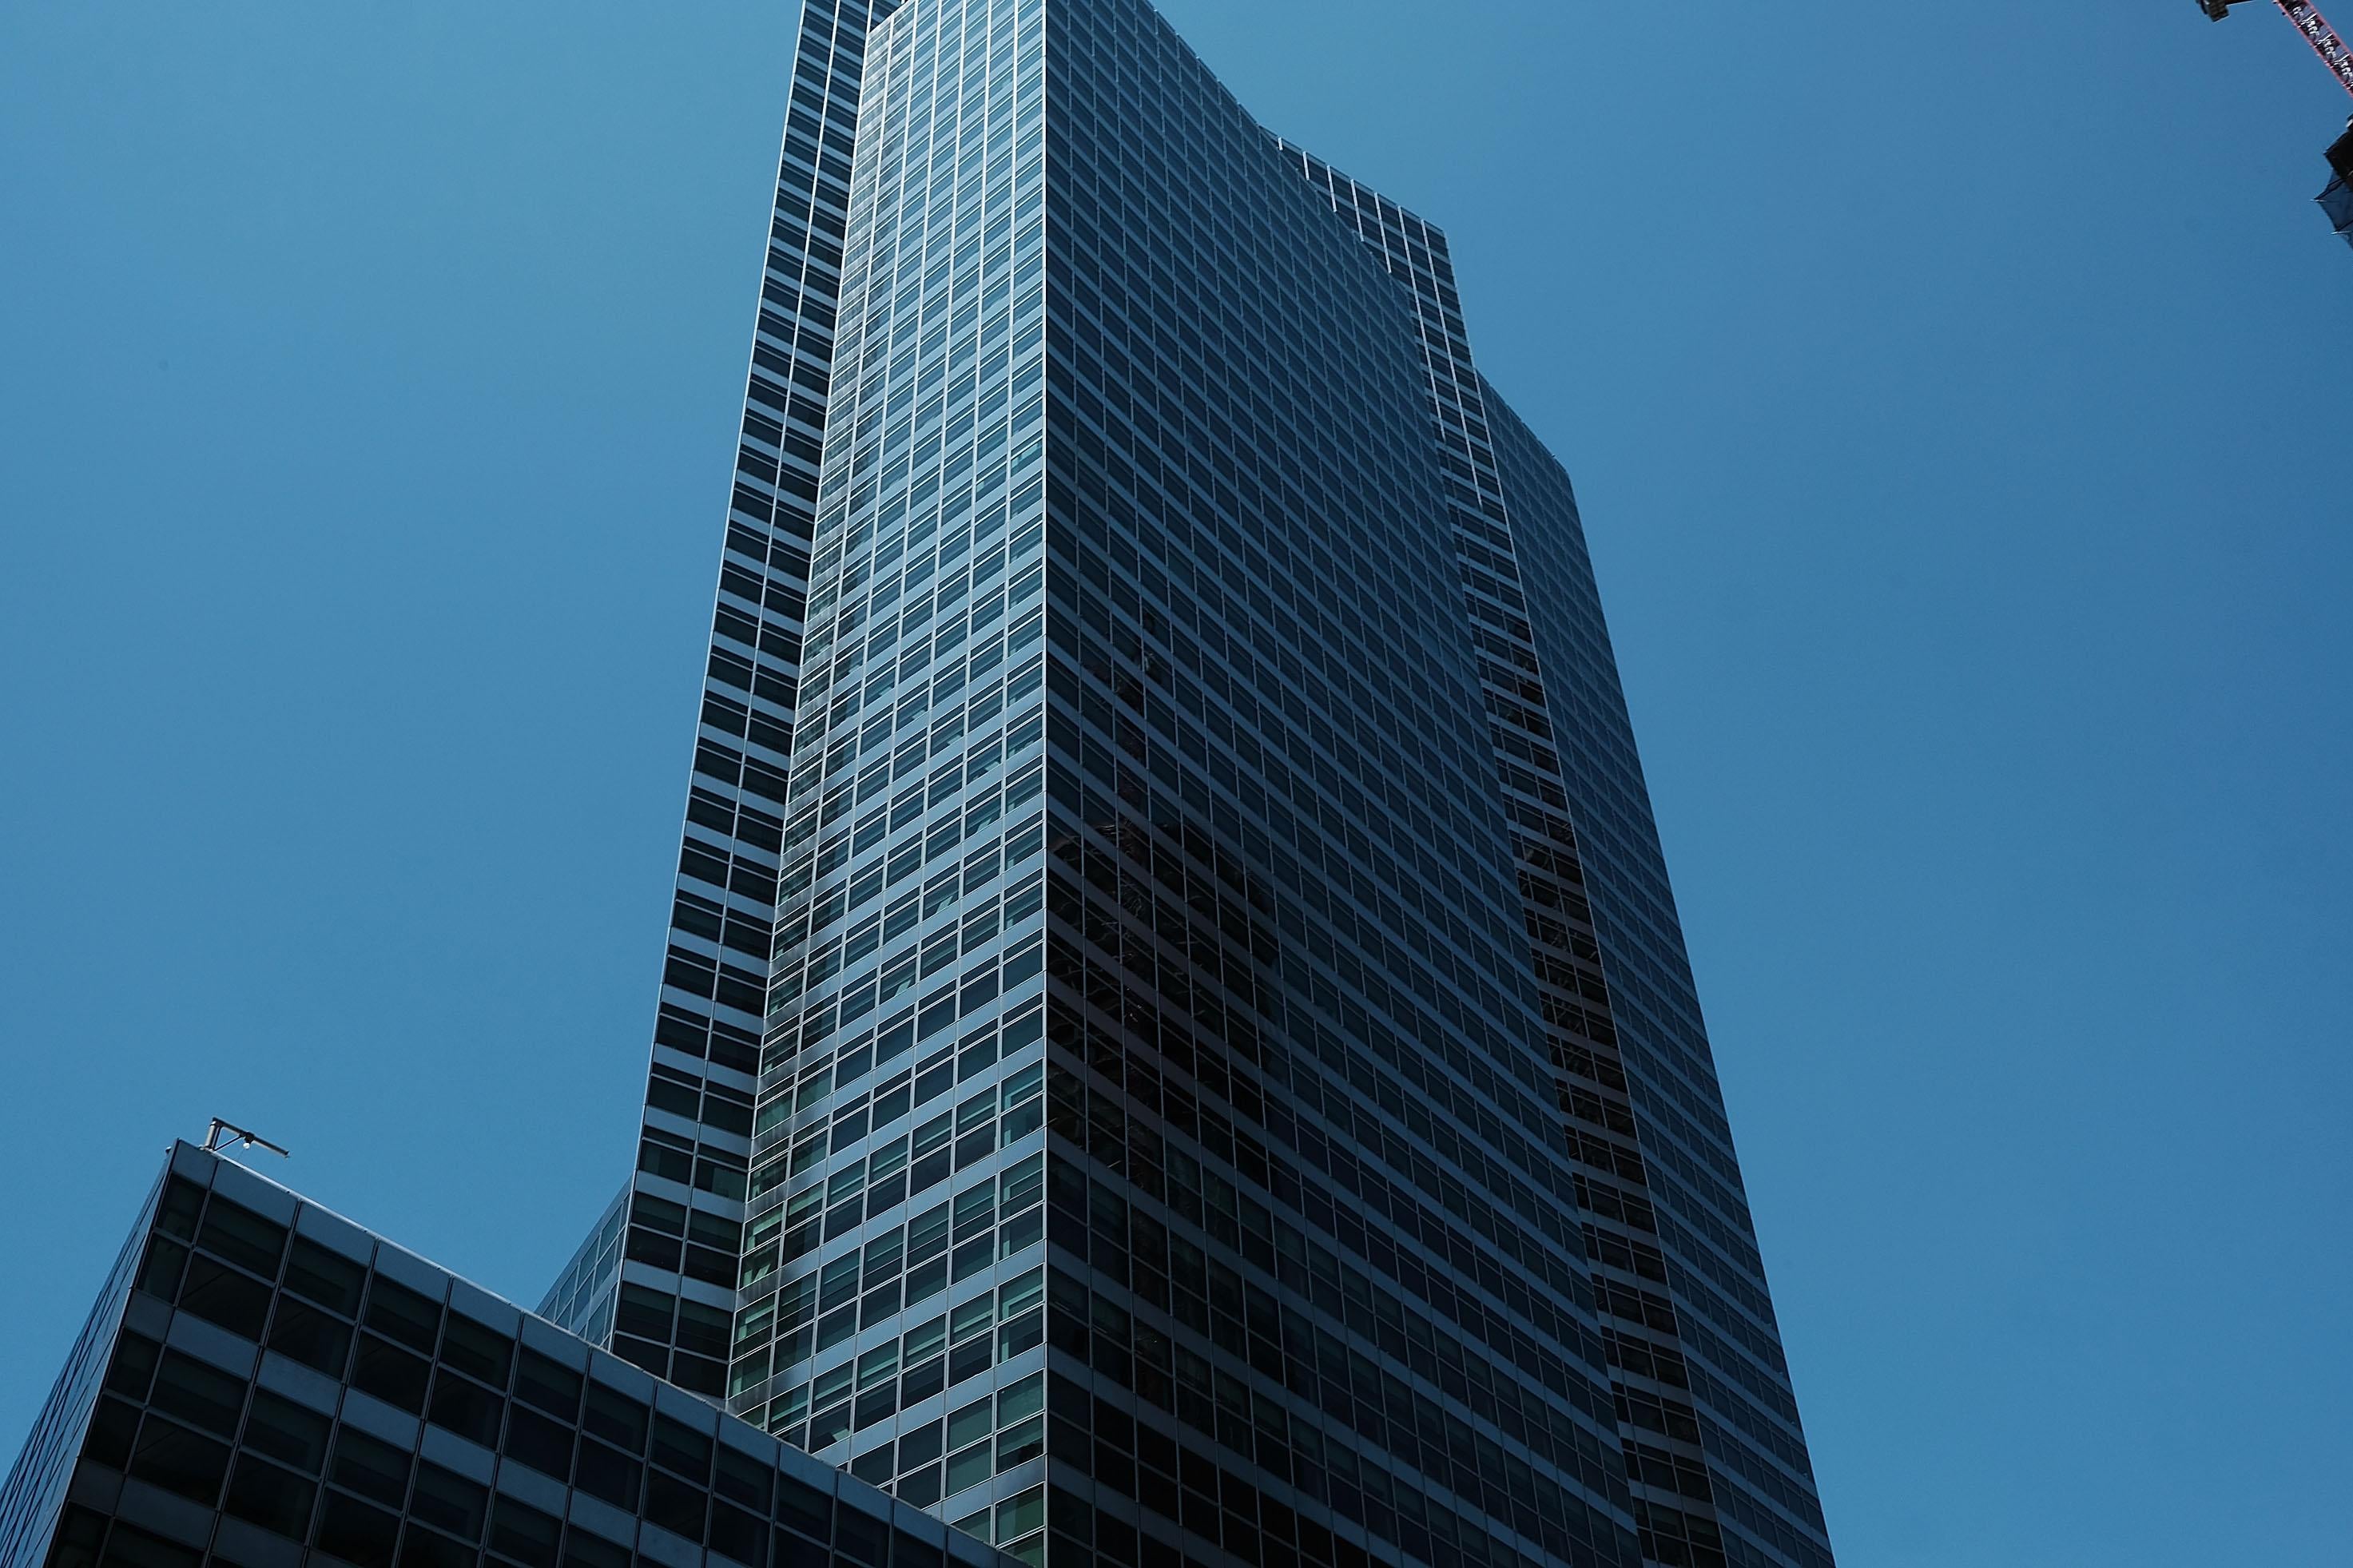 Goldman Sachs' New York headquarters in lower Manhattan.